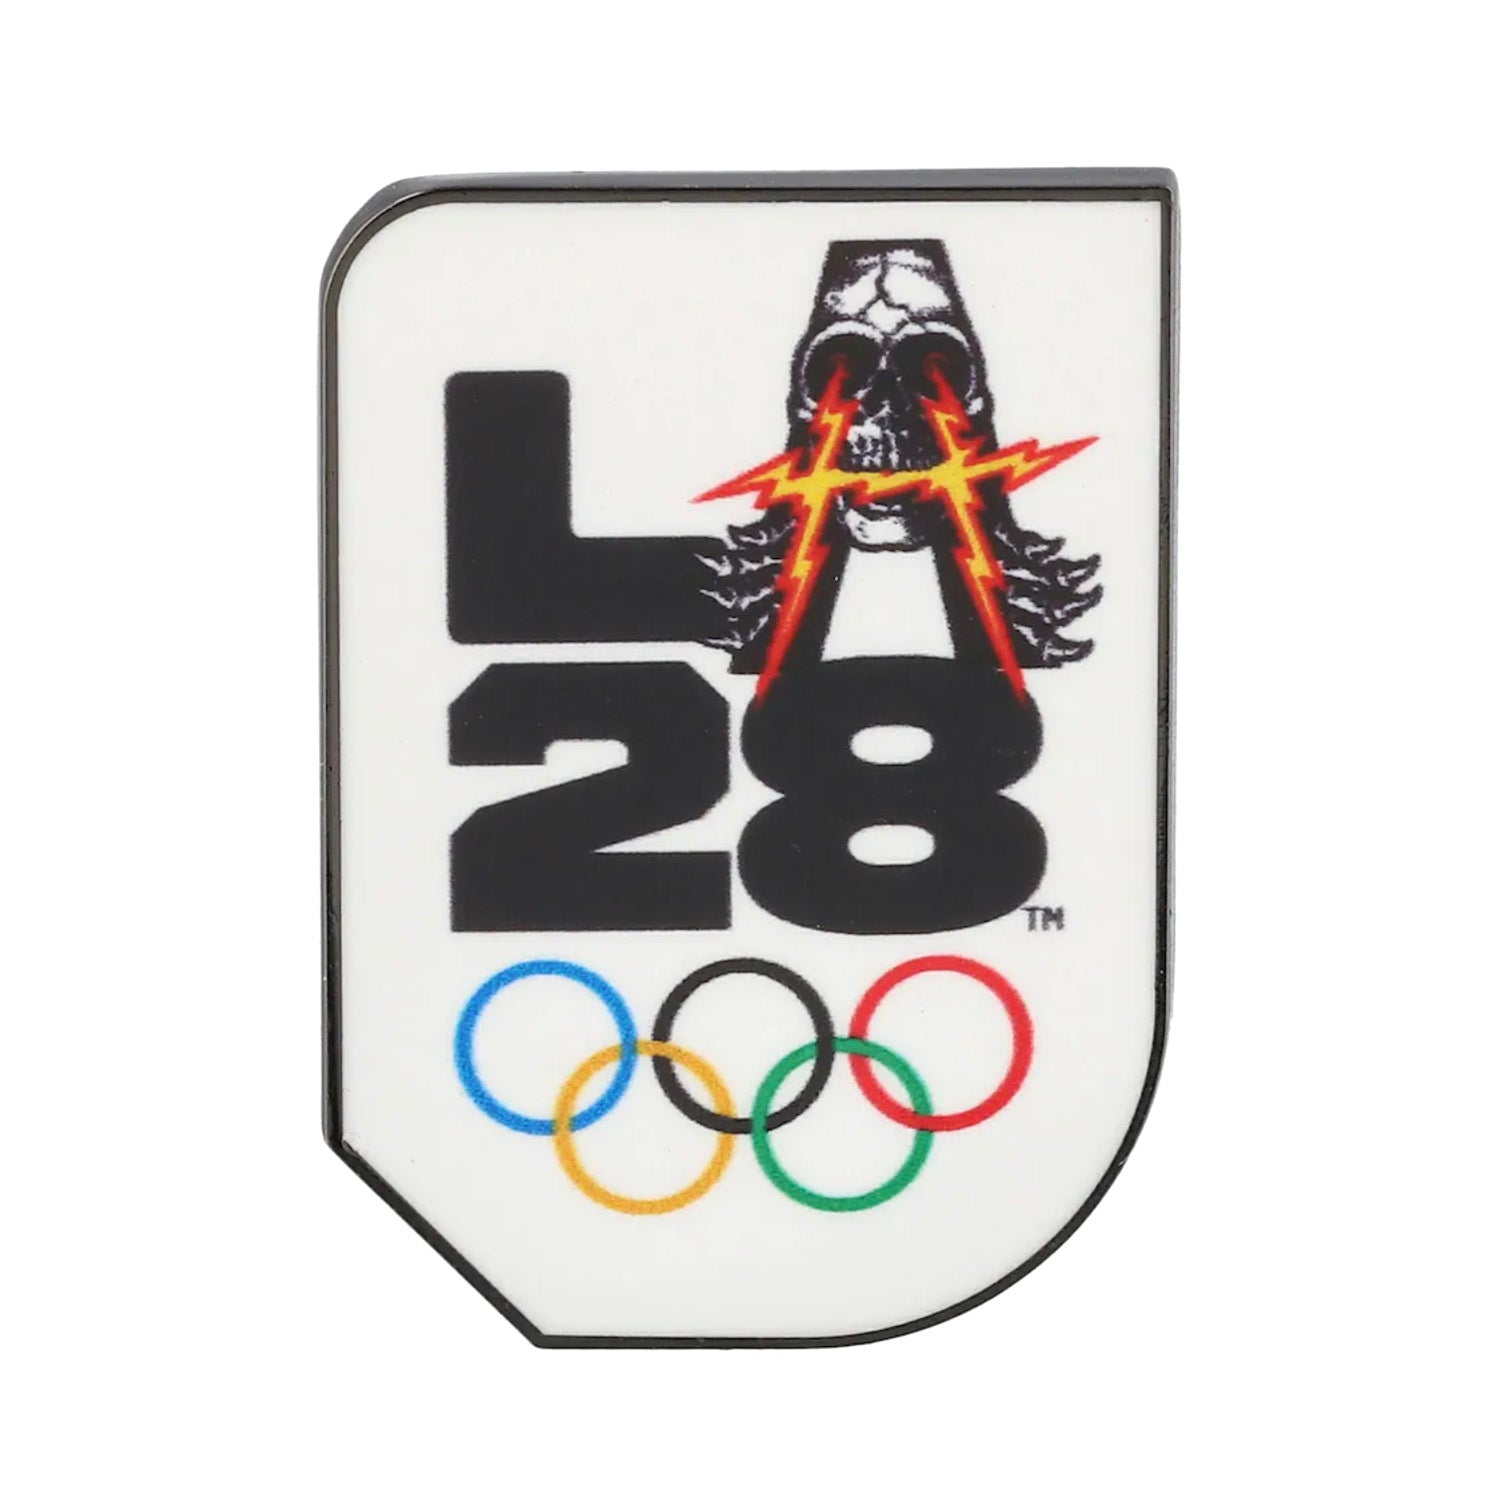 LA 2028 Olympics Logo in Skateboarding